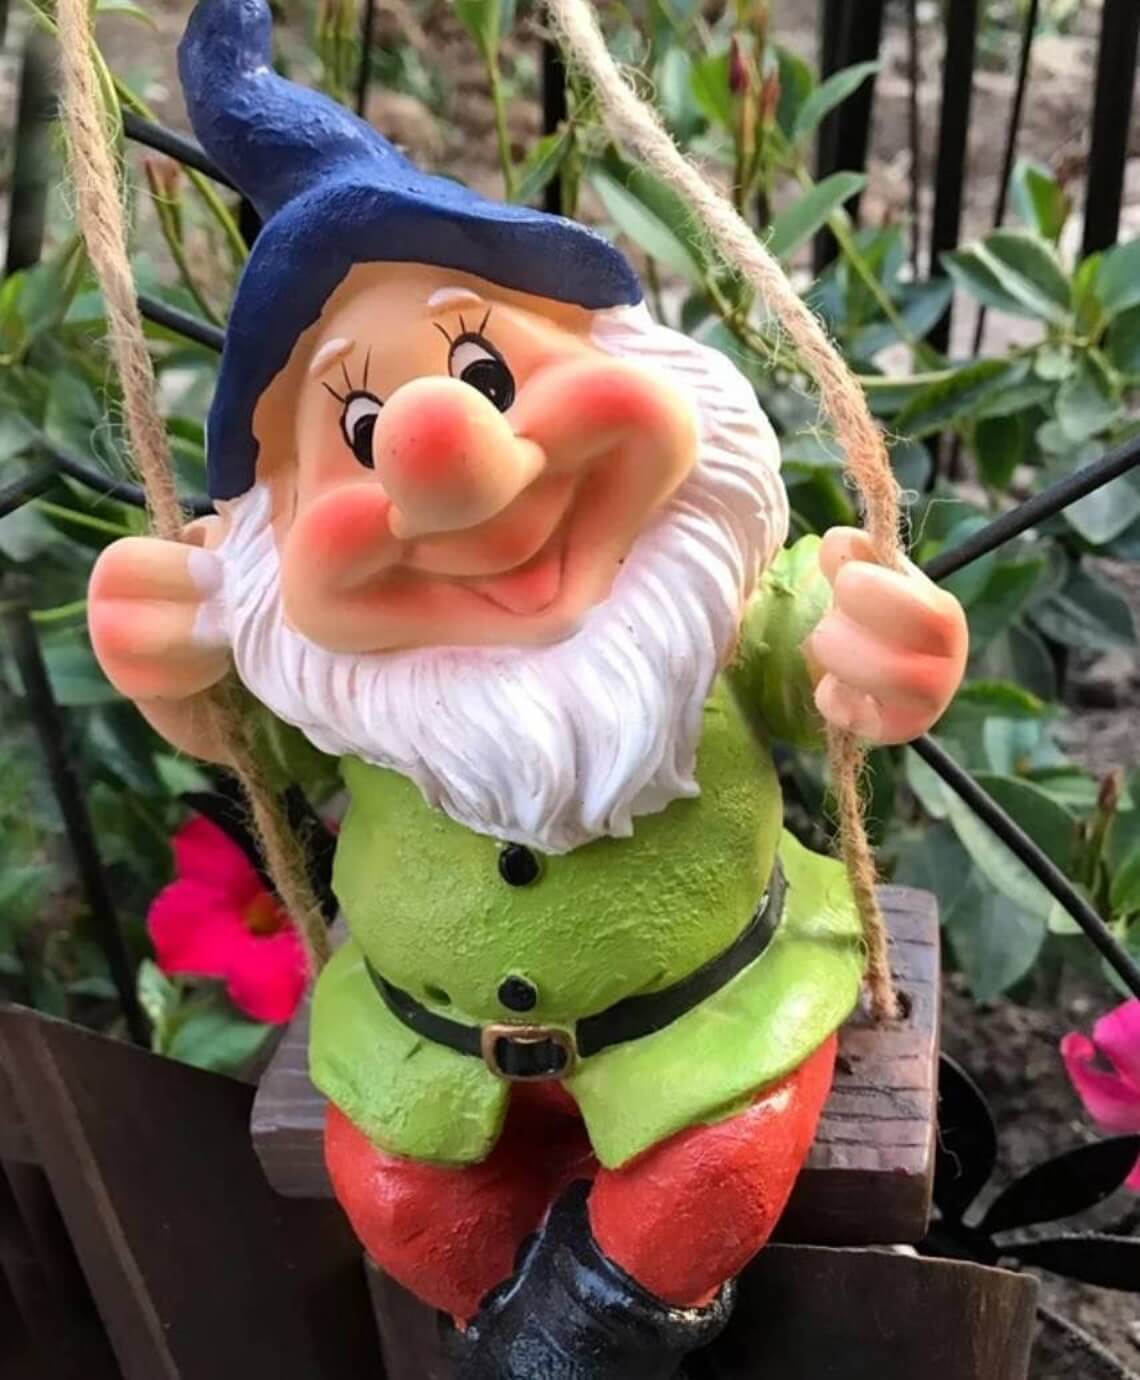 Snow White Dwarf Garden Gnome on Swing